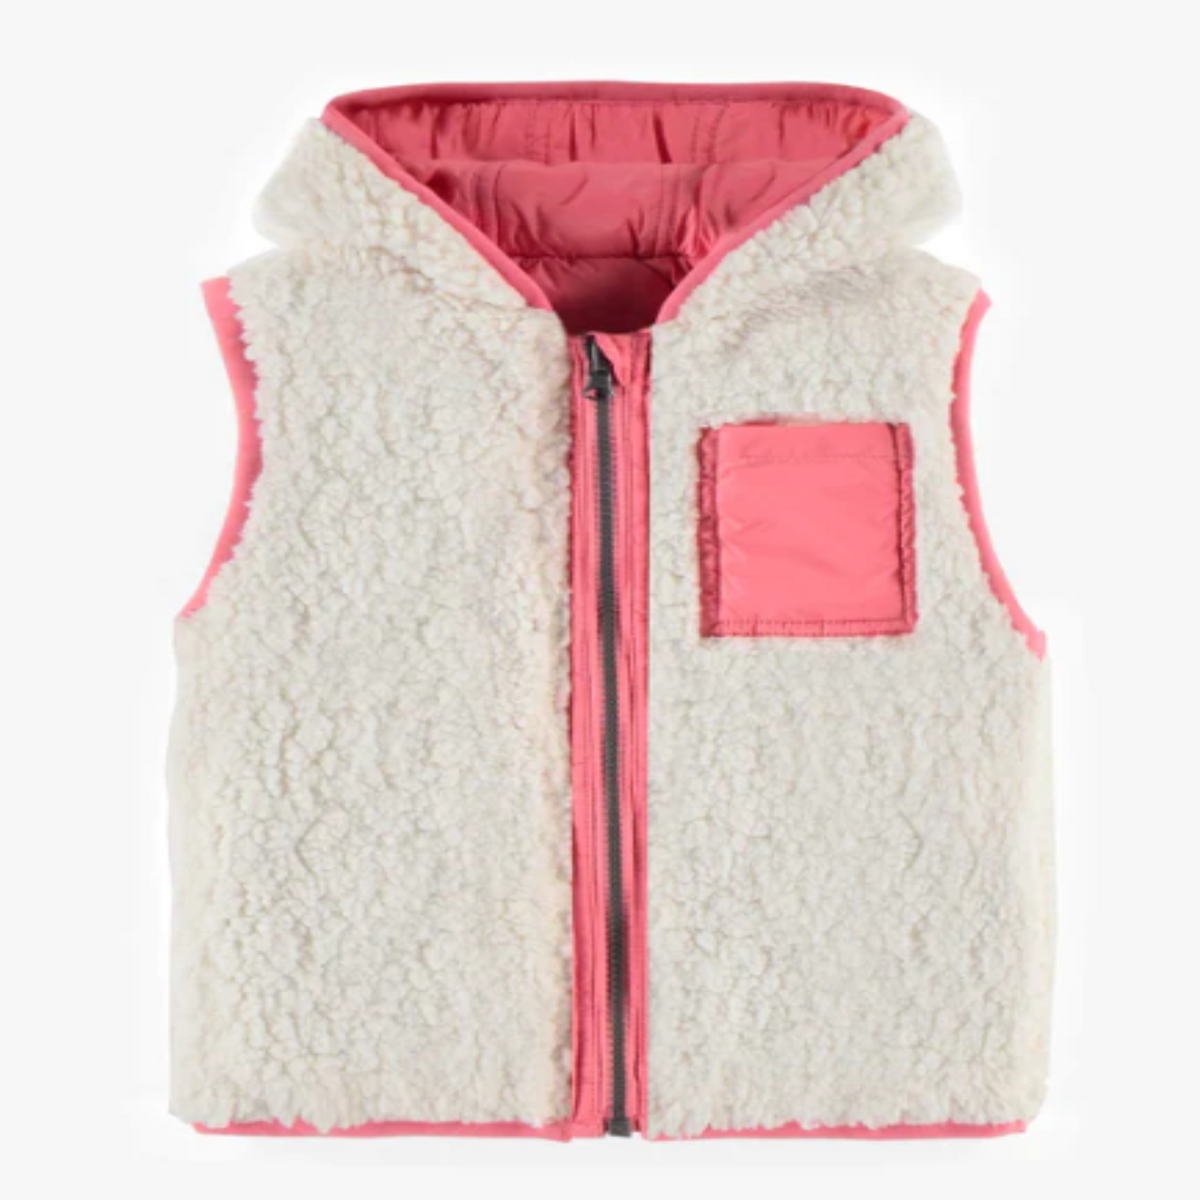 Pink reversible sleeveless jacket in nylon and sherpa